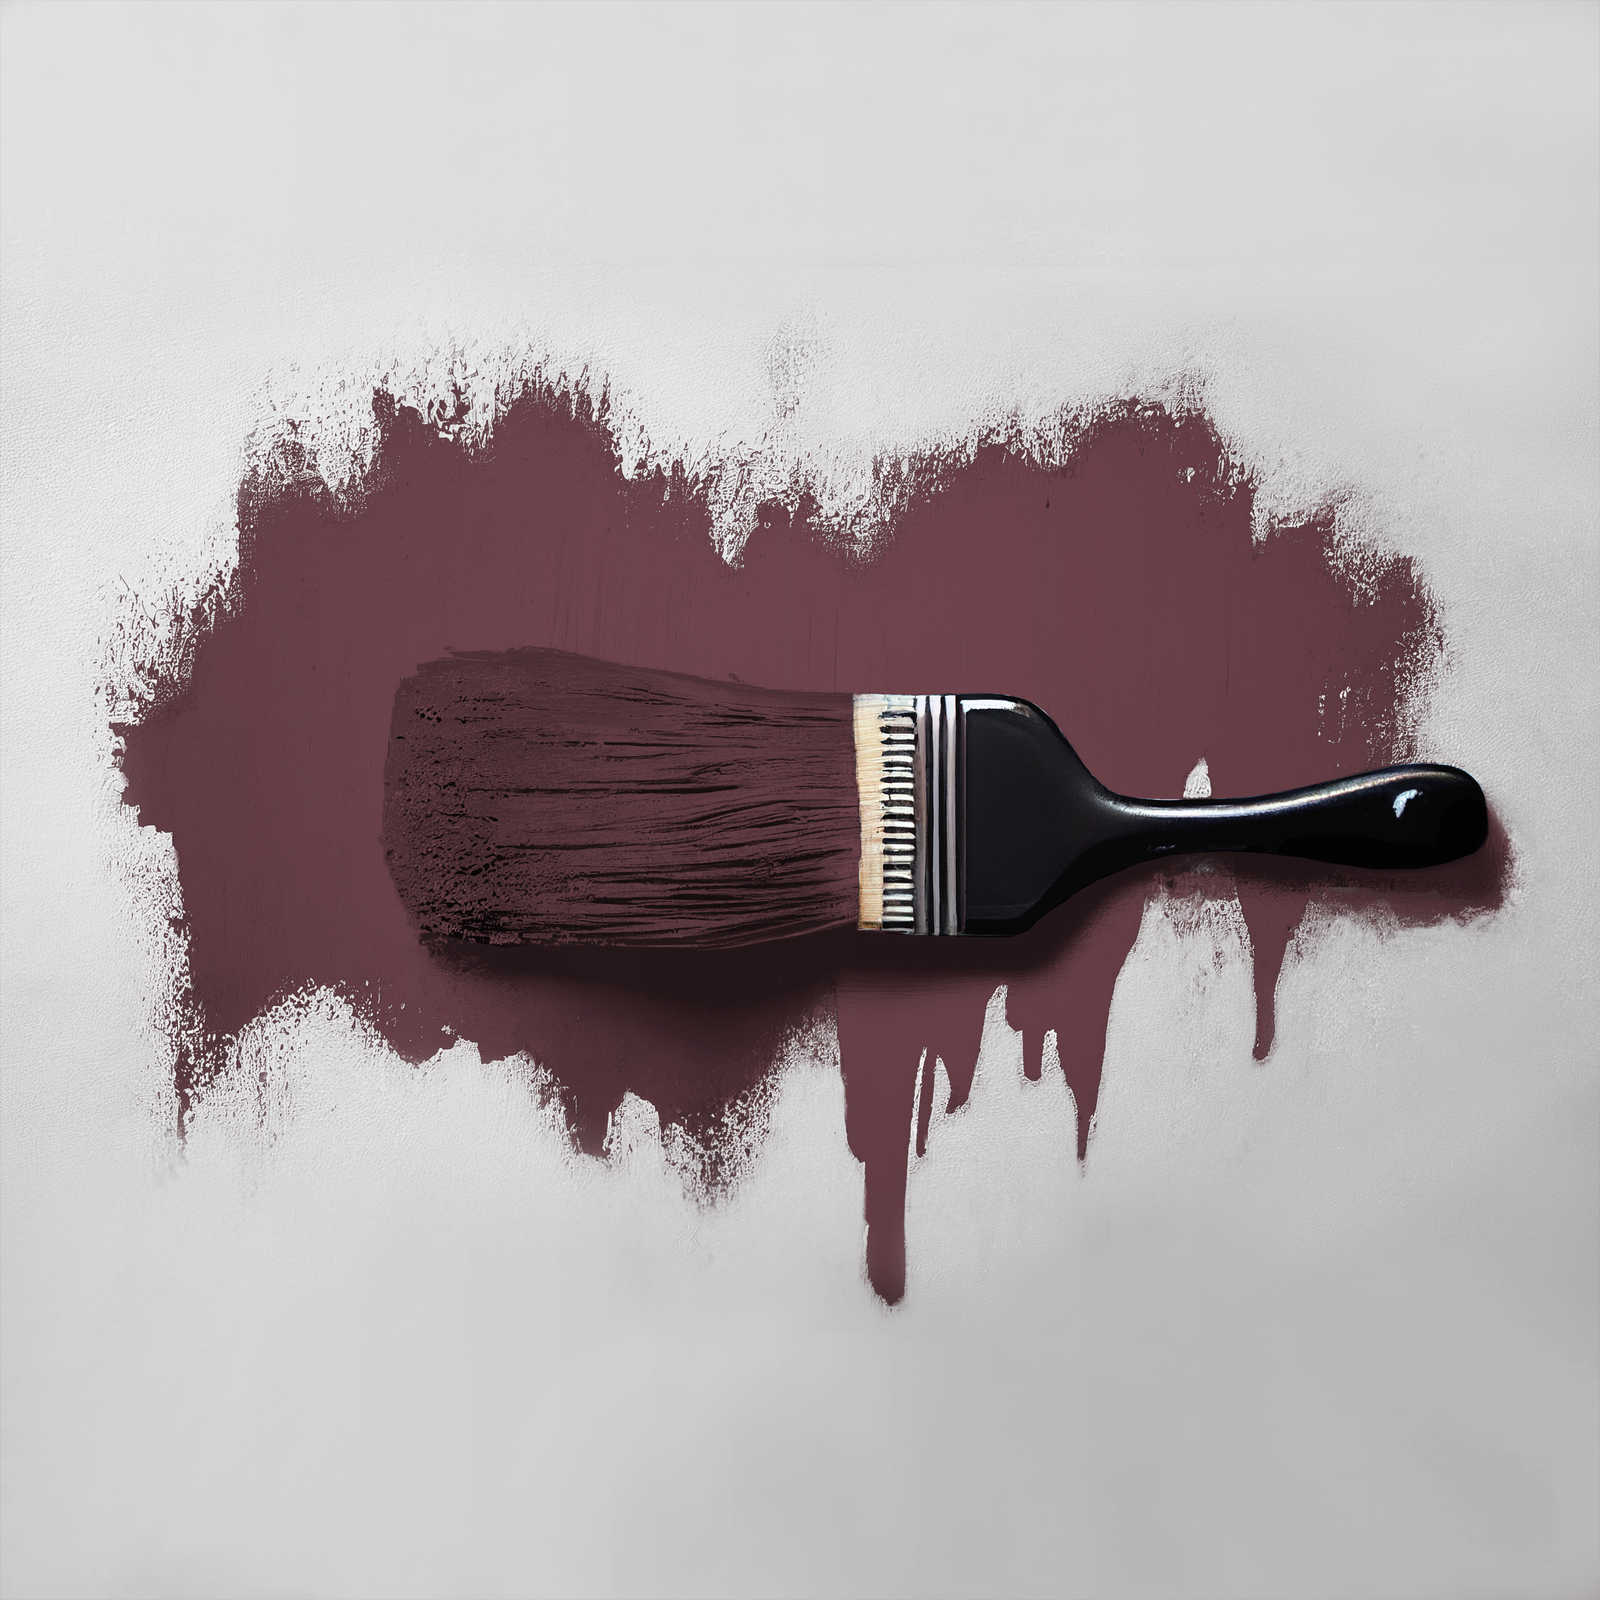             Wandfarbe in einem intensivem Bordeaux »Red Wine« TCK7013 – 5 Liter
        